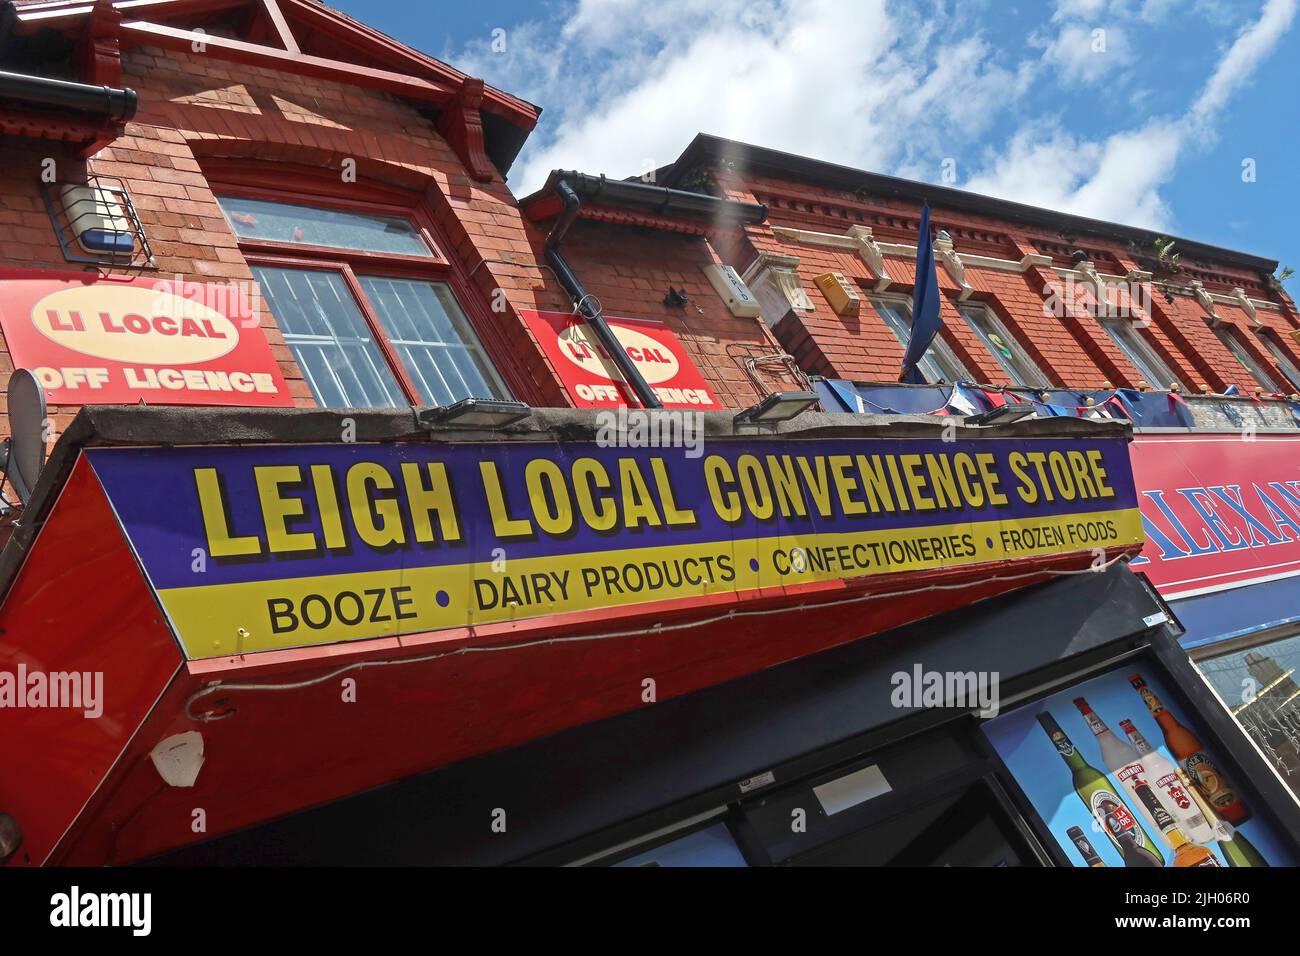 LI Local, Leigh Local Convenience Store, Booze, Diary Products, pasticceria, Frozen Foods, 20 Railway Rd, Leigh, Inghilterra, Regno Unito, WN7 4AX Foto Stock